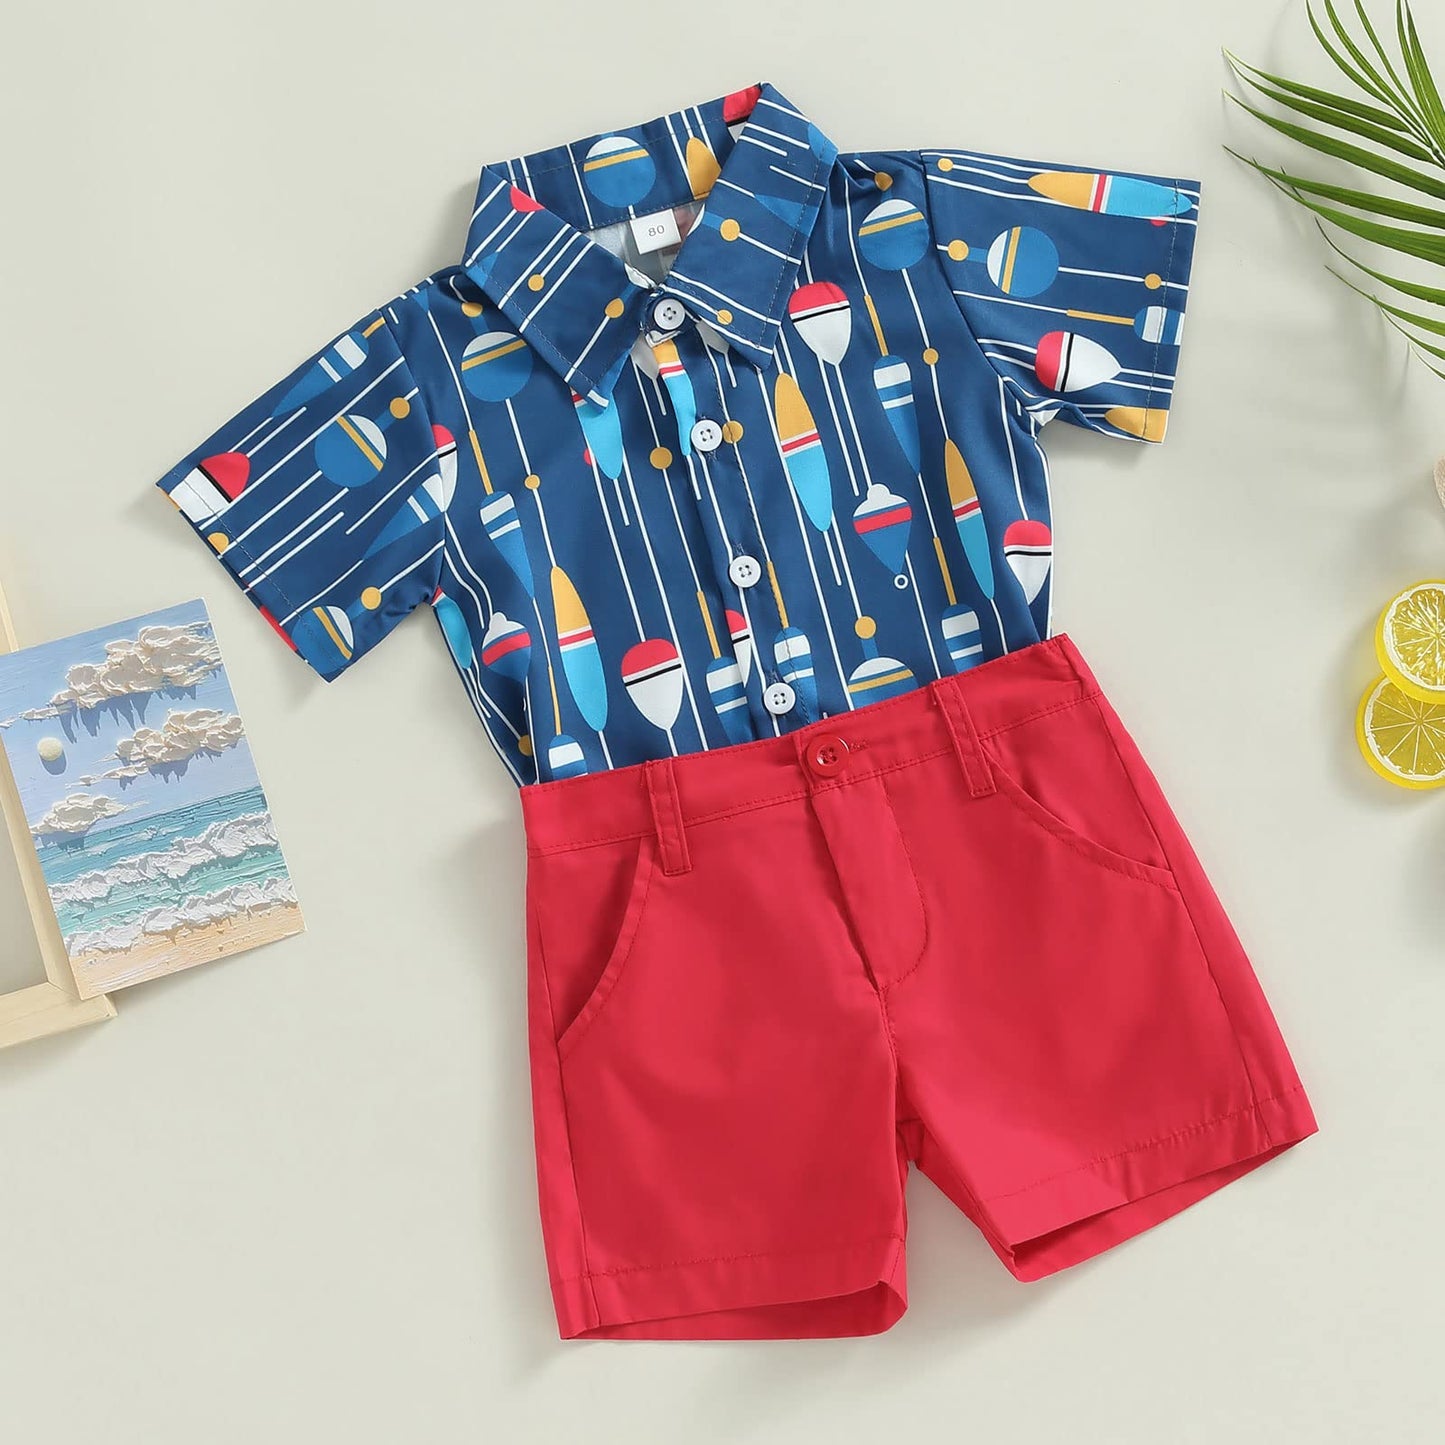 Toddler Boy Summer Clothes Set Button Down Short Sleeve Shirt Elastic Waist Shorts 2Pcs Fashion Boys Outfits 12-18 Months